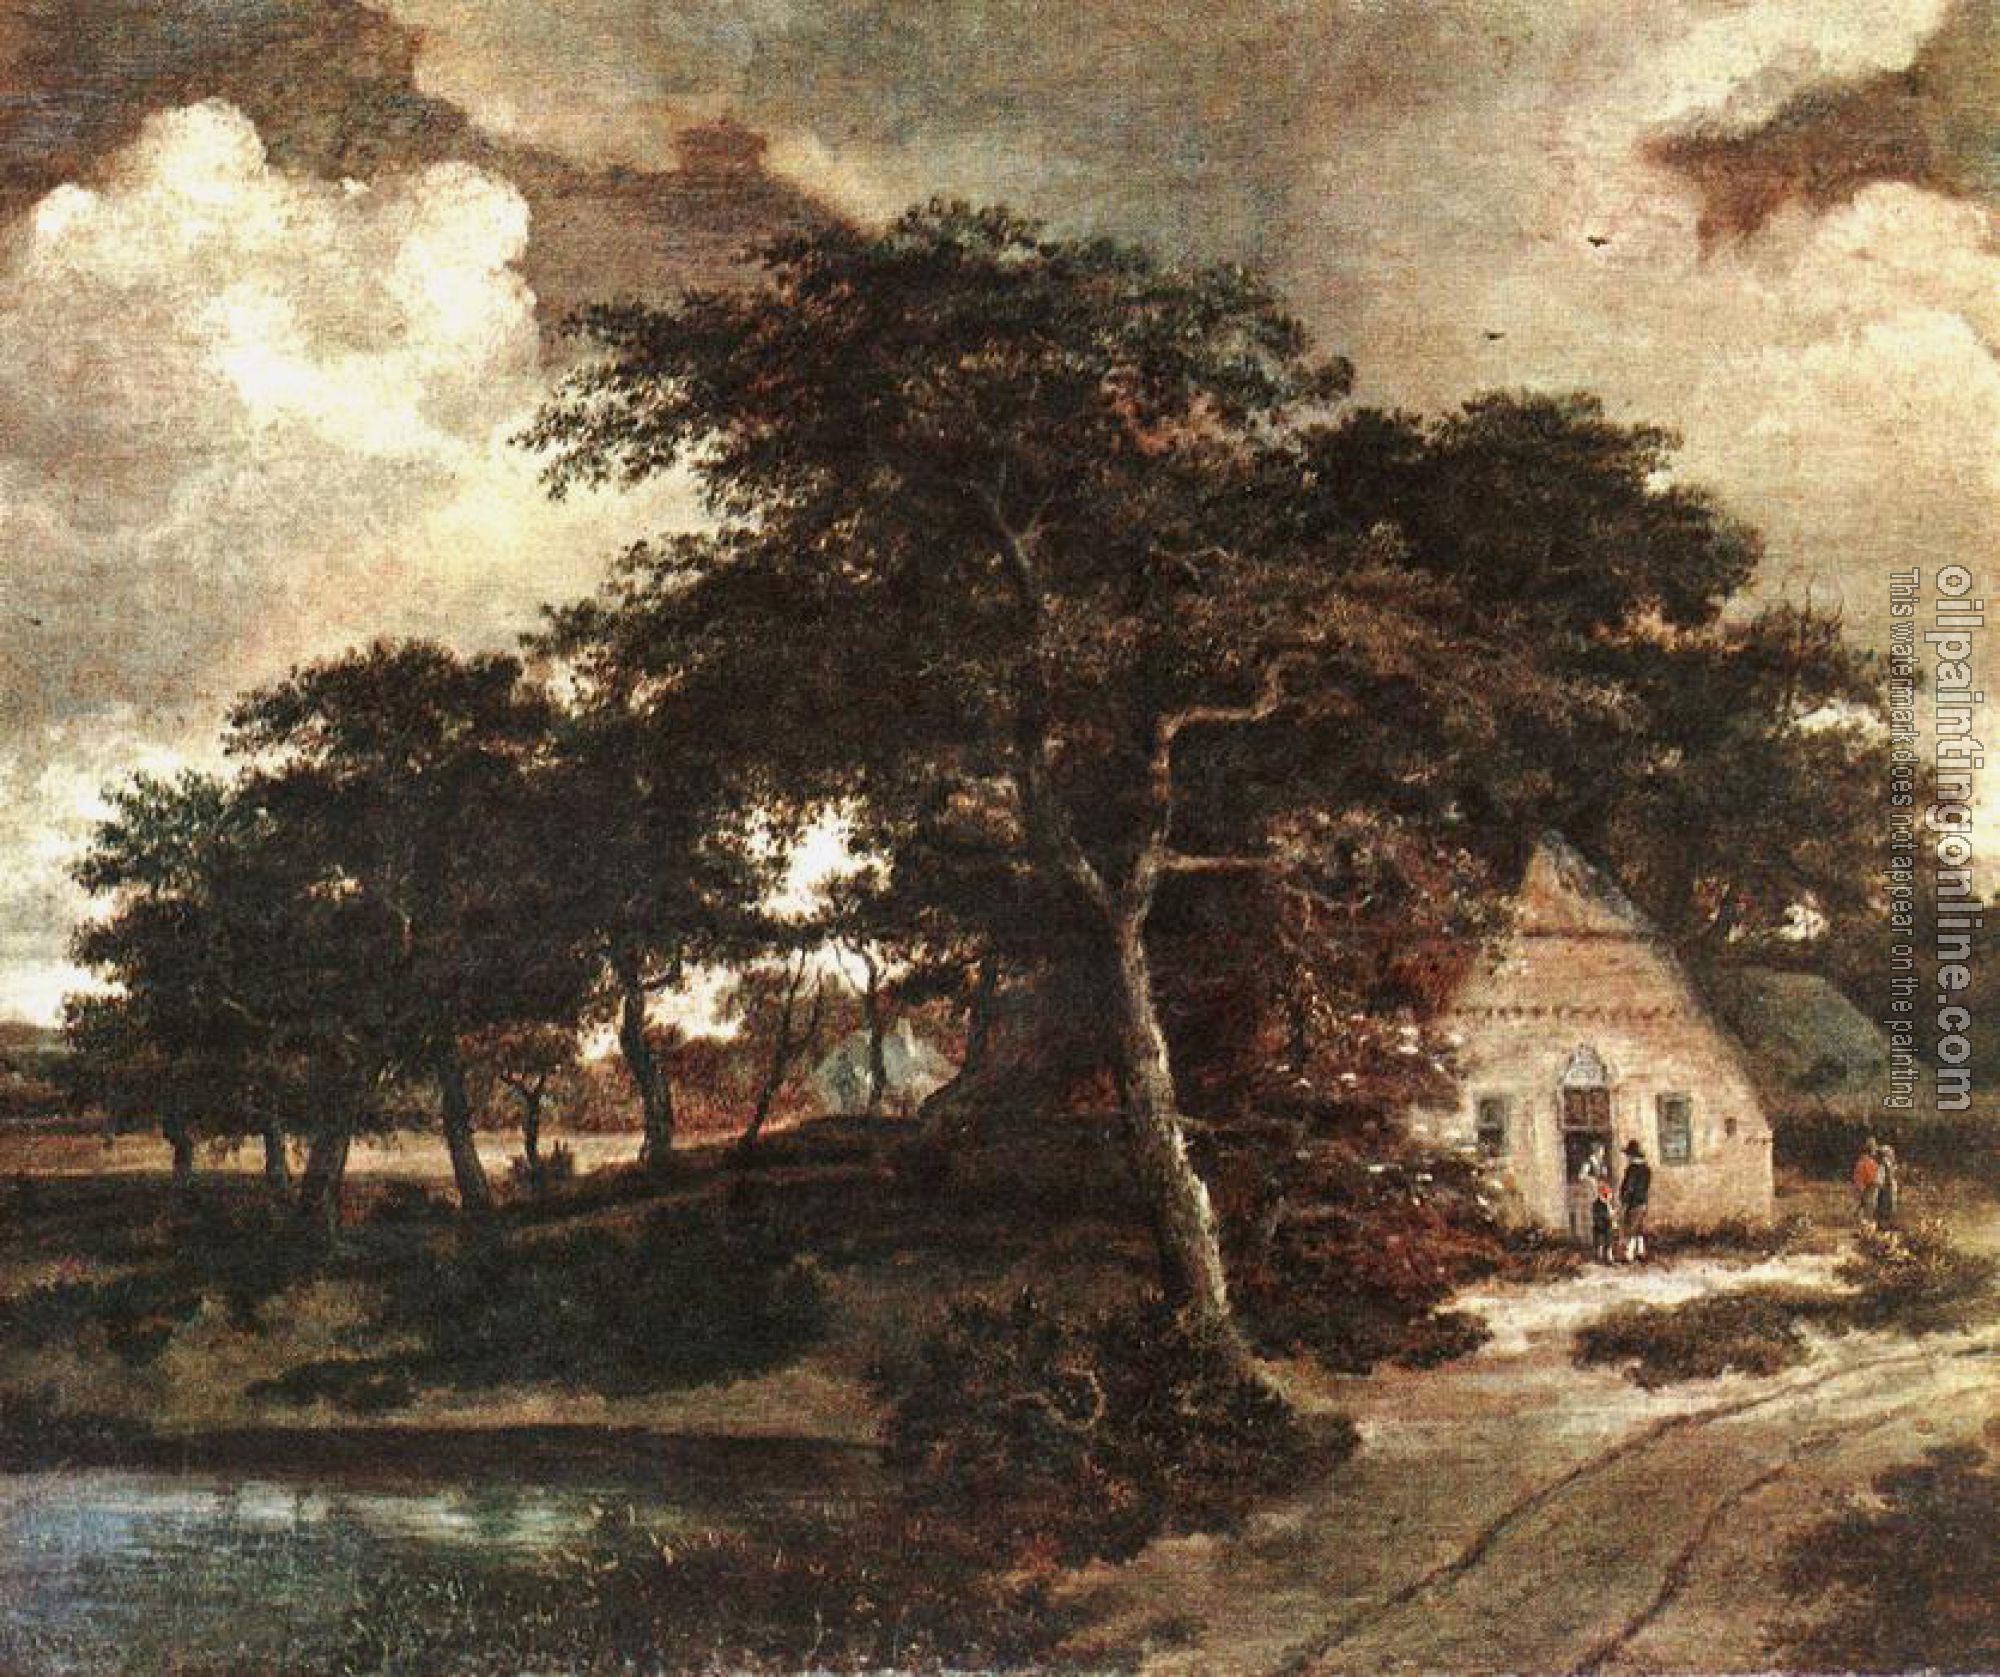 Meindert Hobbema - Landscape with a Hut